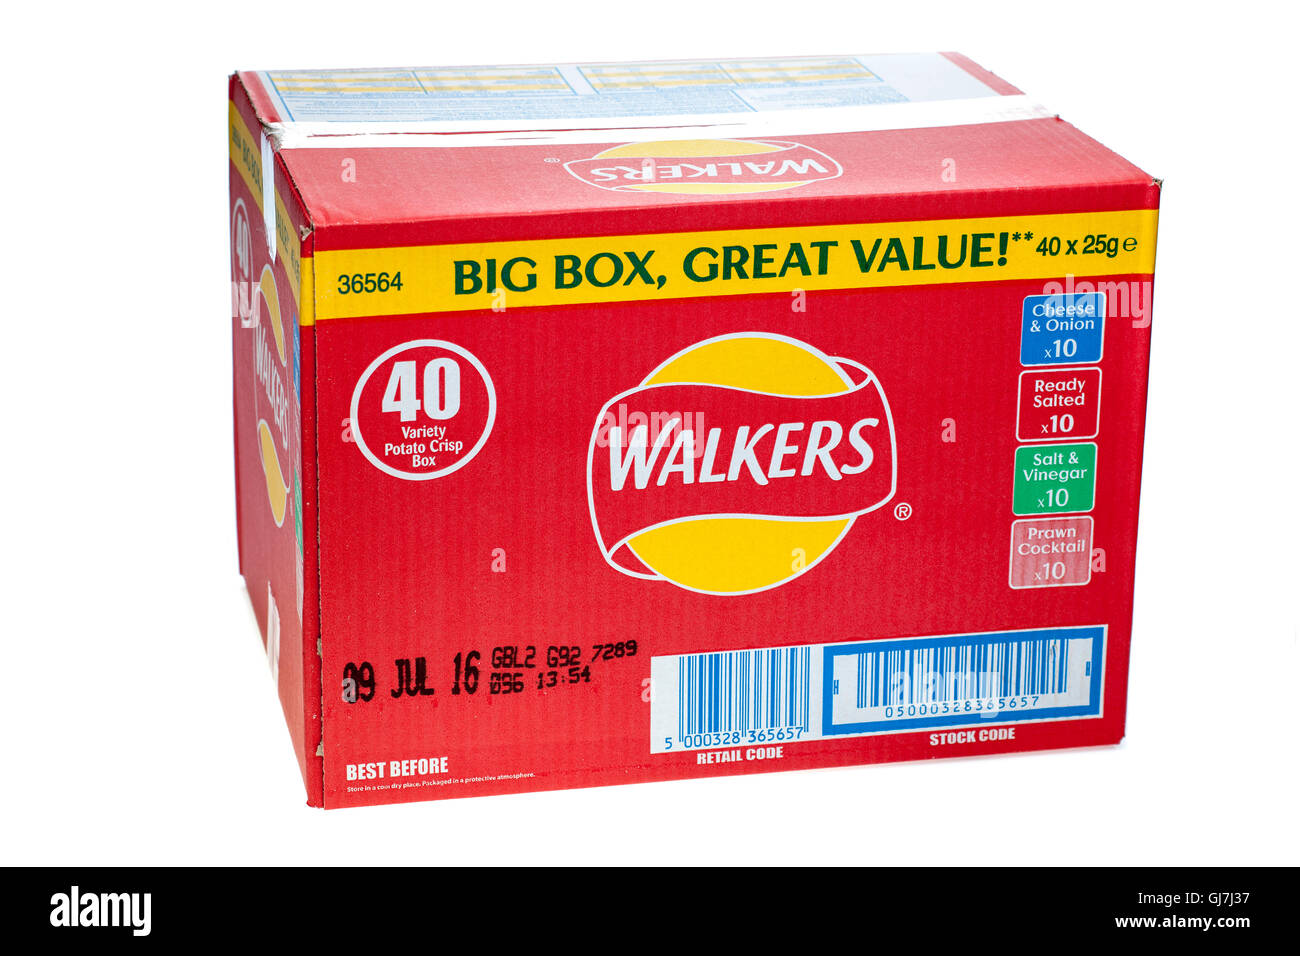 Walkers potato crisps 40 variety big box great value Stock Photo